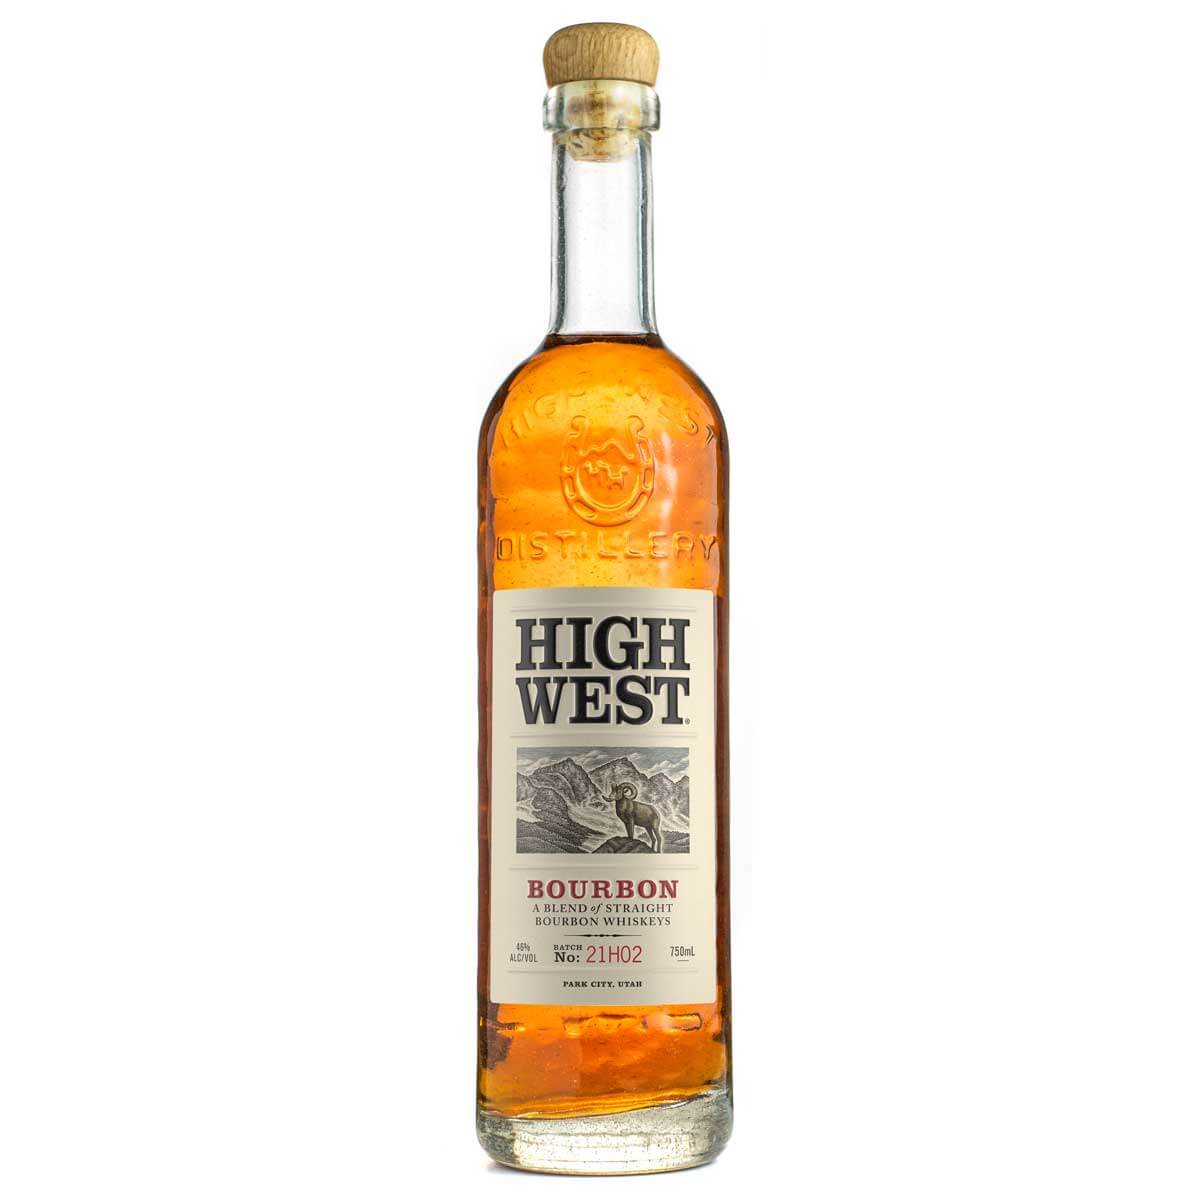 High West Bourbon bottle